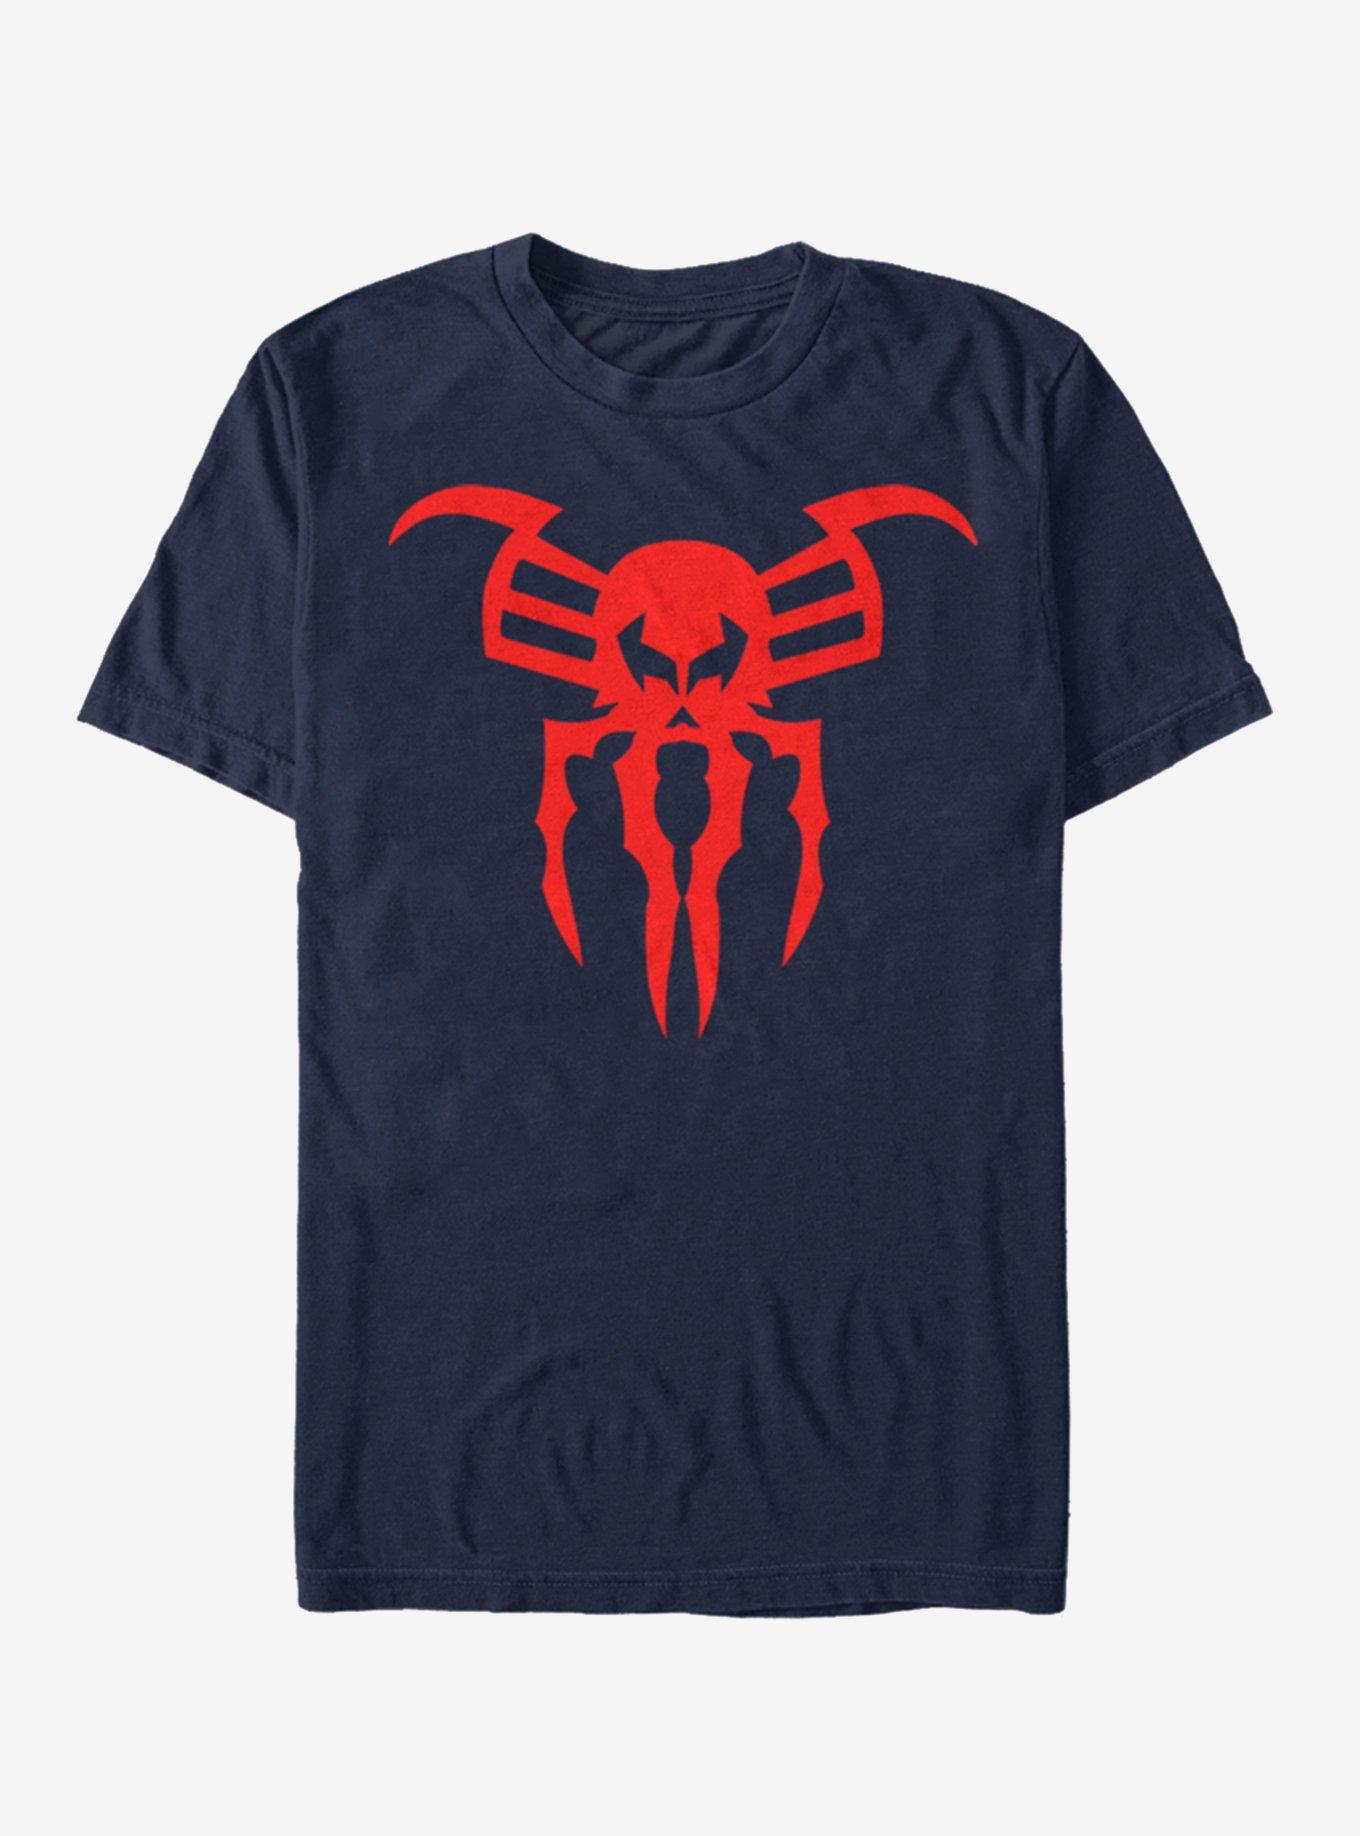 Marvel Spider-Man Spider-Man 2099 Icon T-Shirt, NAVY, hi-res